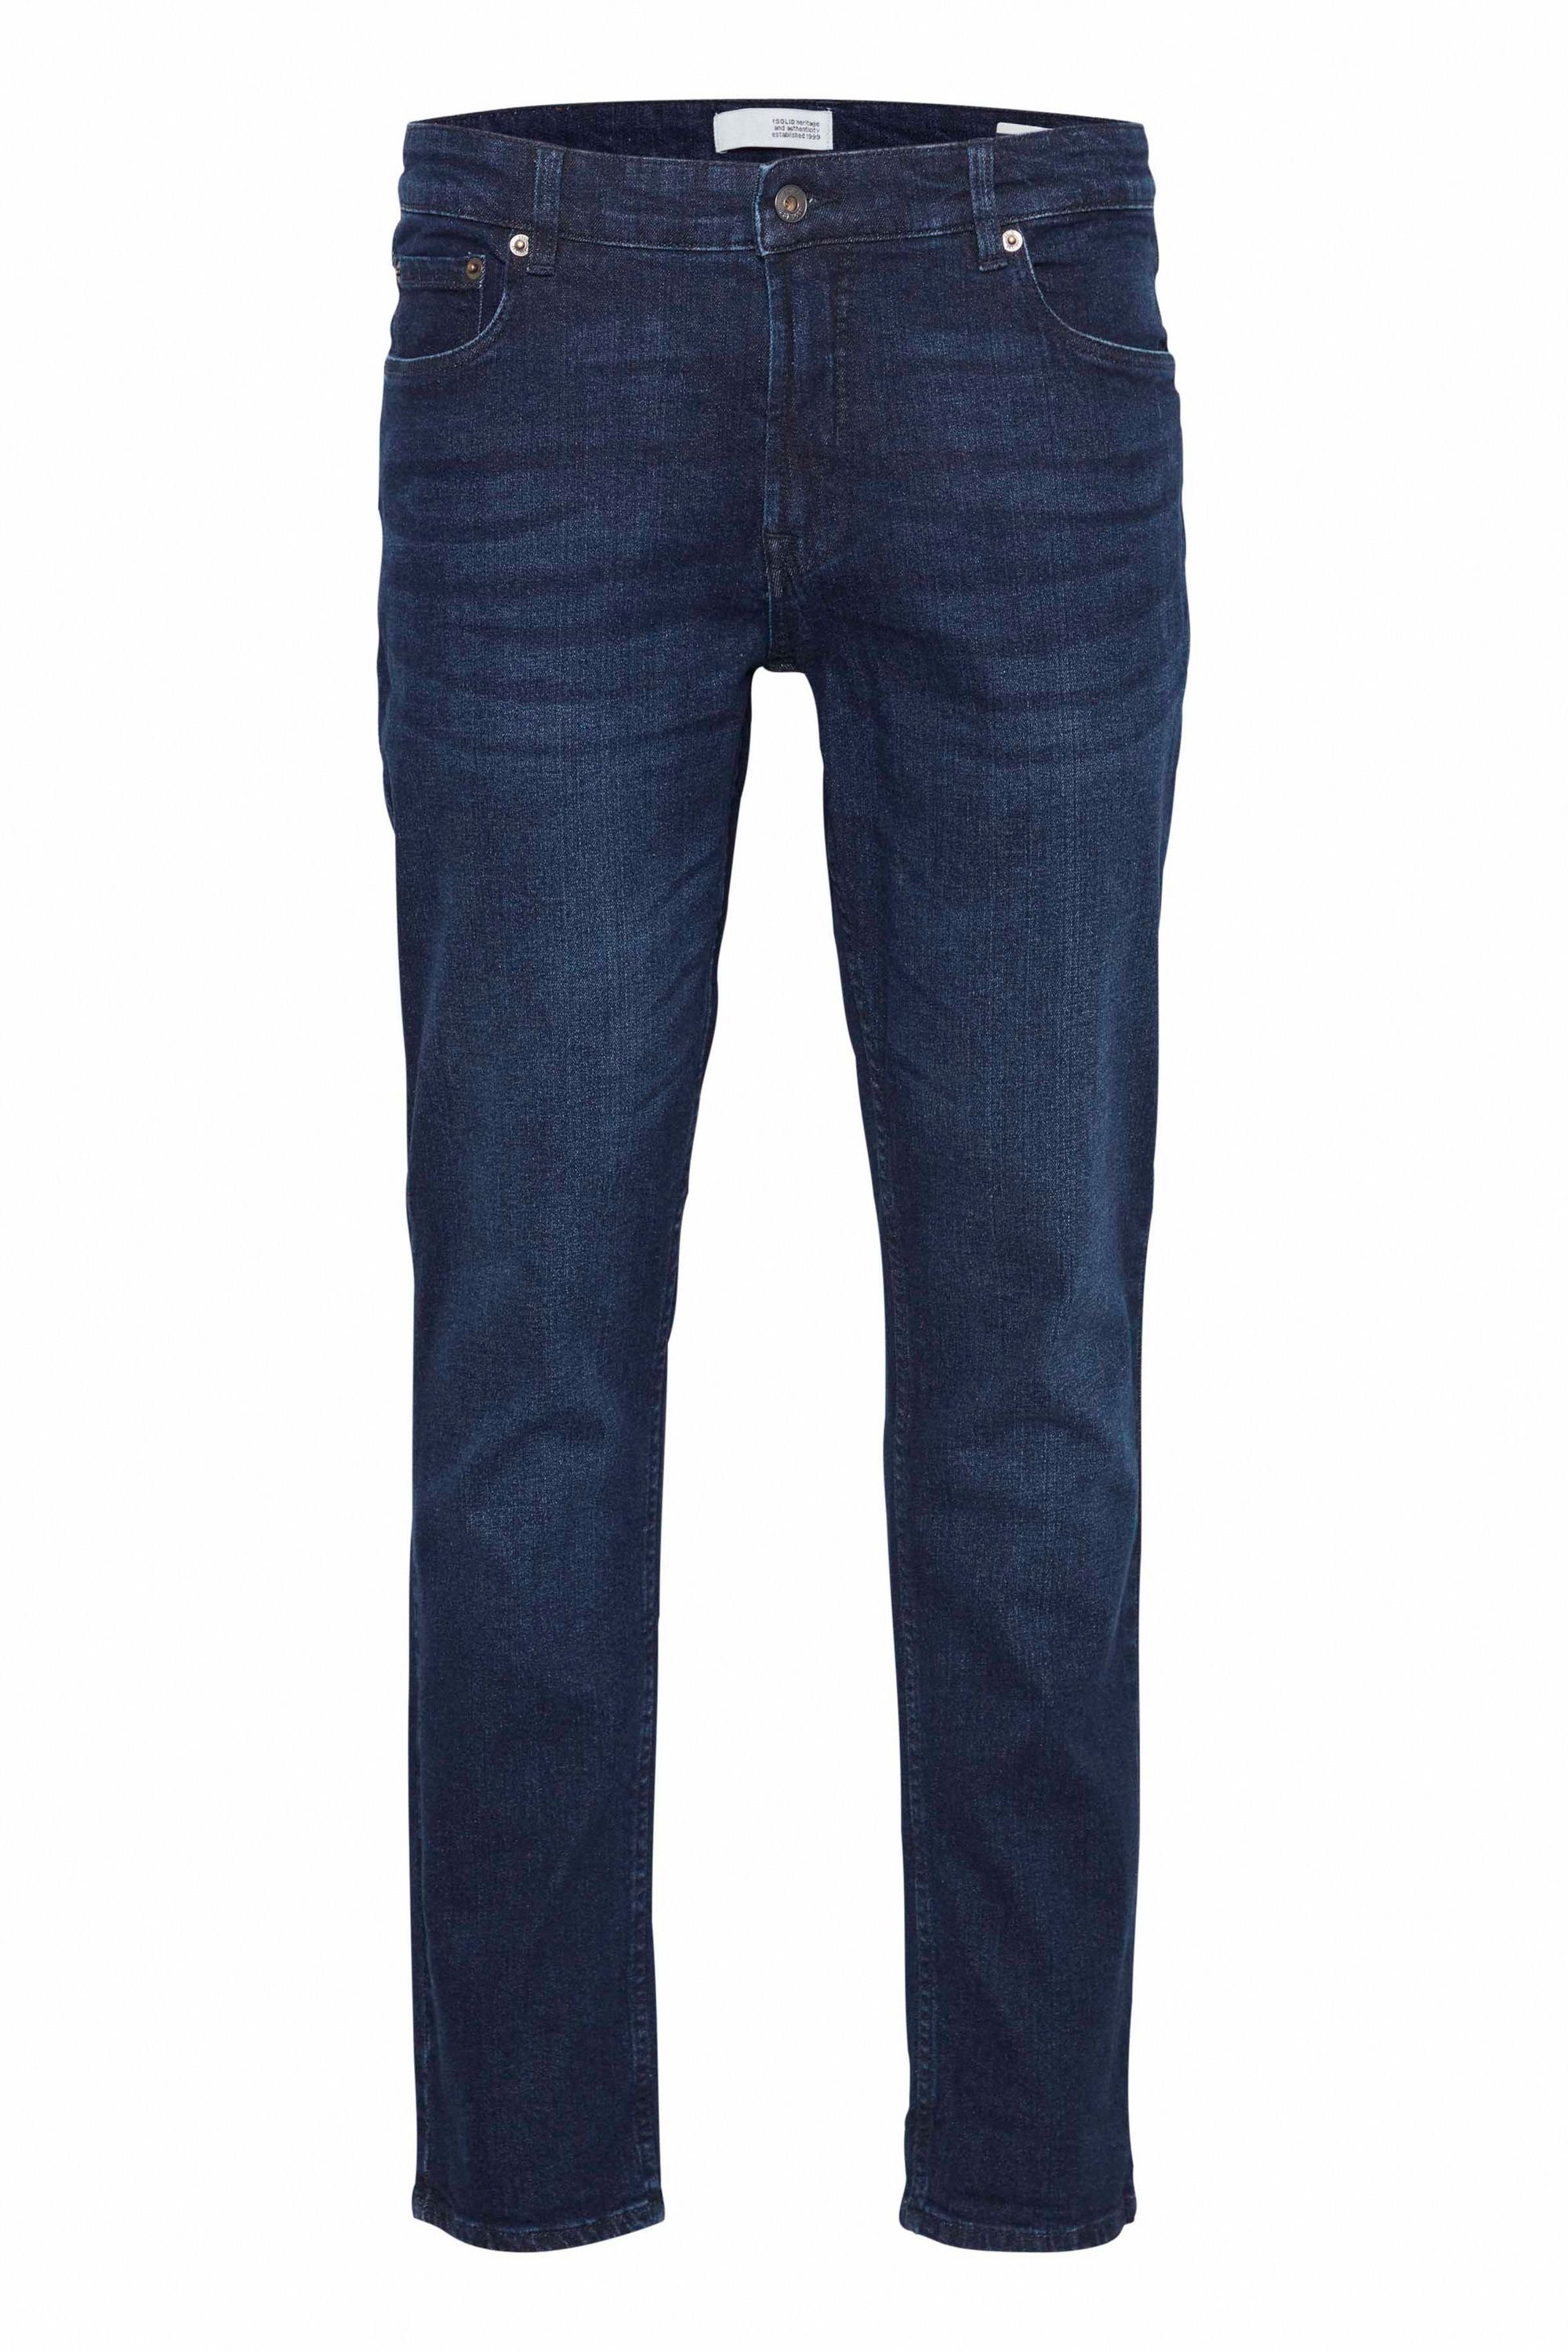 - 21104848 5-Pocket-Jeans SDJoy Blue 202 denim (700031) !Solid Dark blue